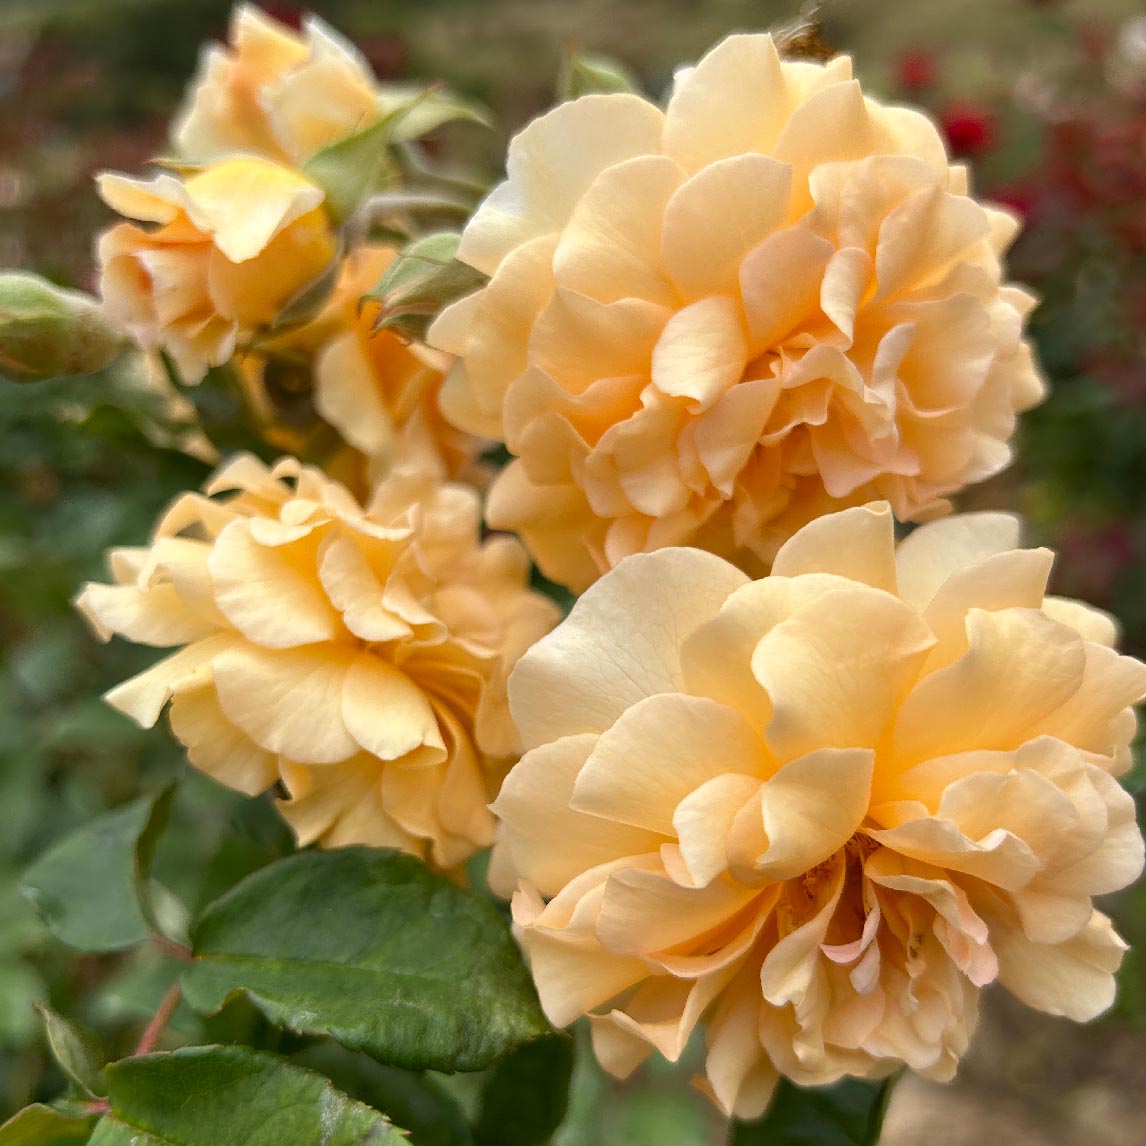 Rose 'Buff beauty'